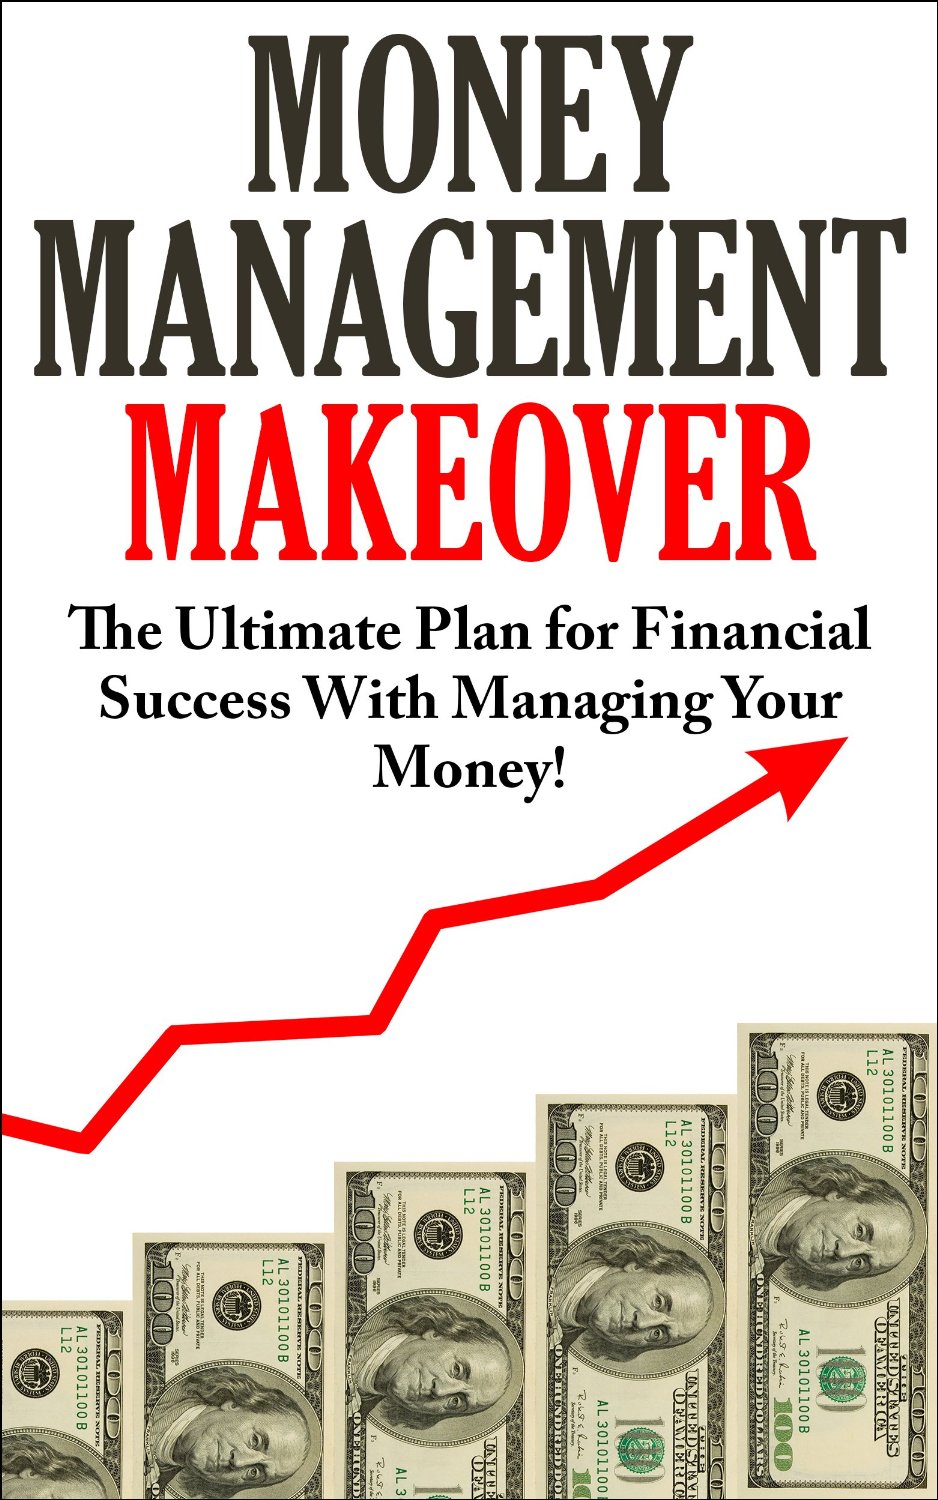 Money Management Makeover by JJ Jones